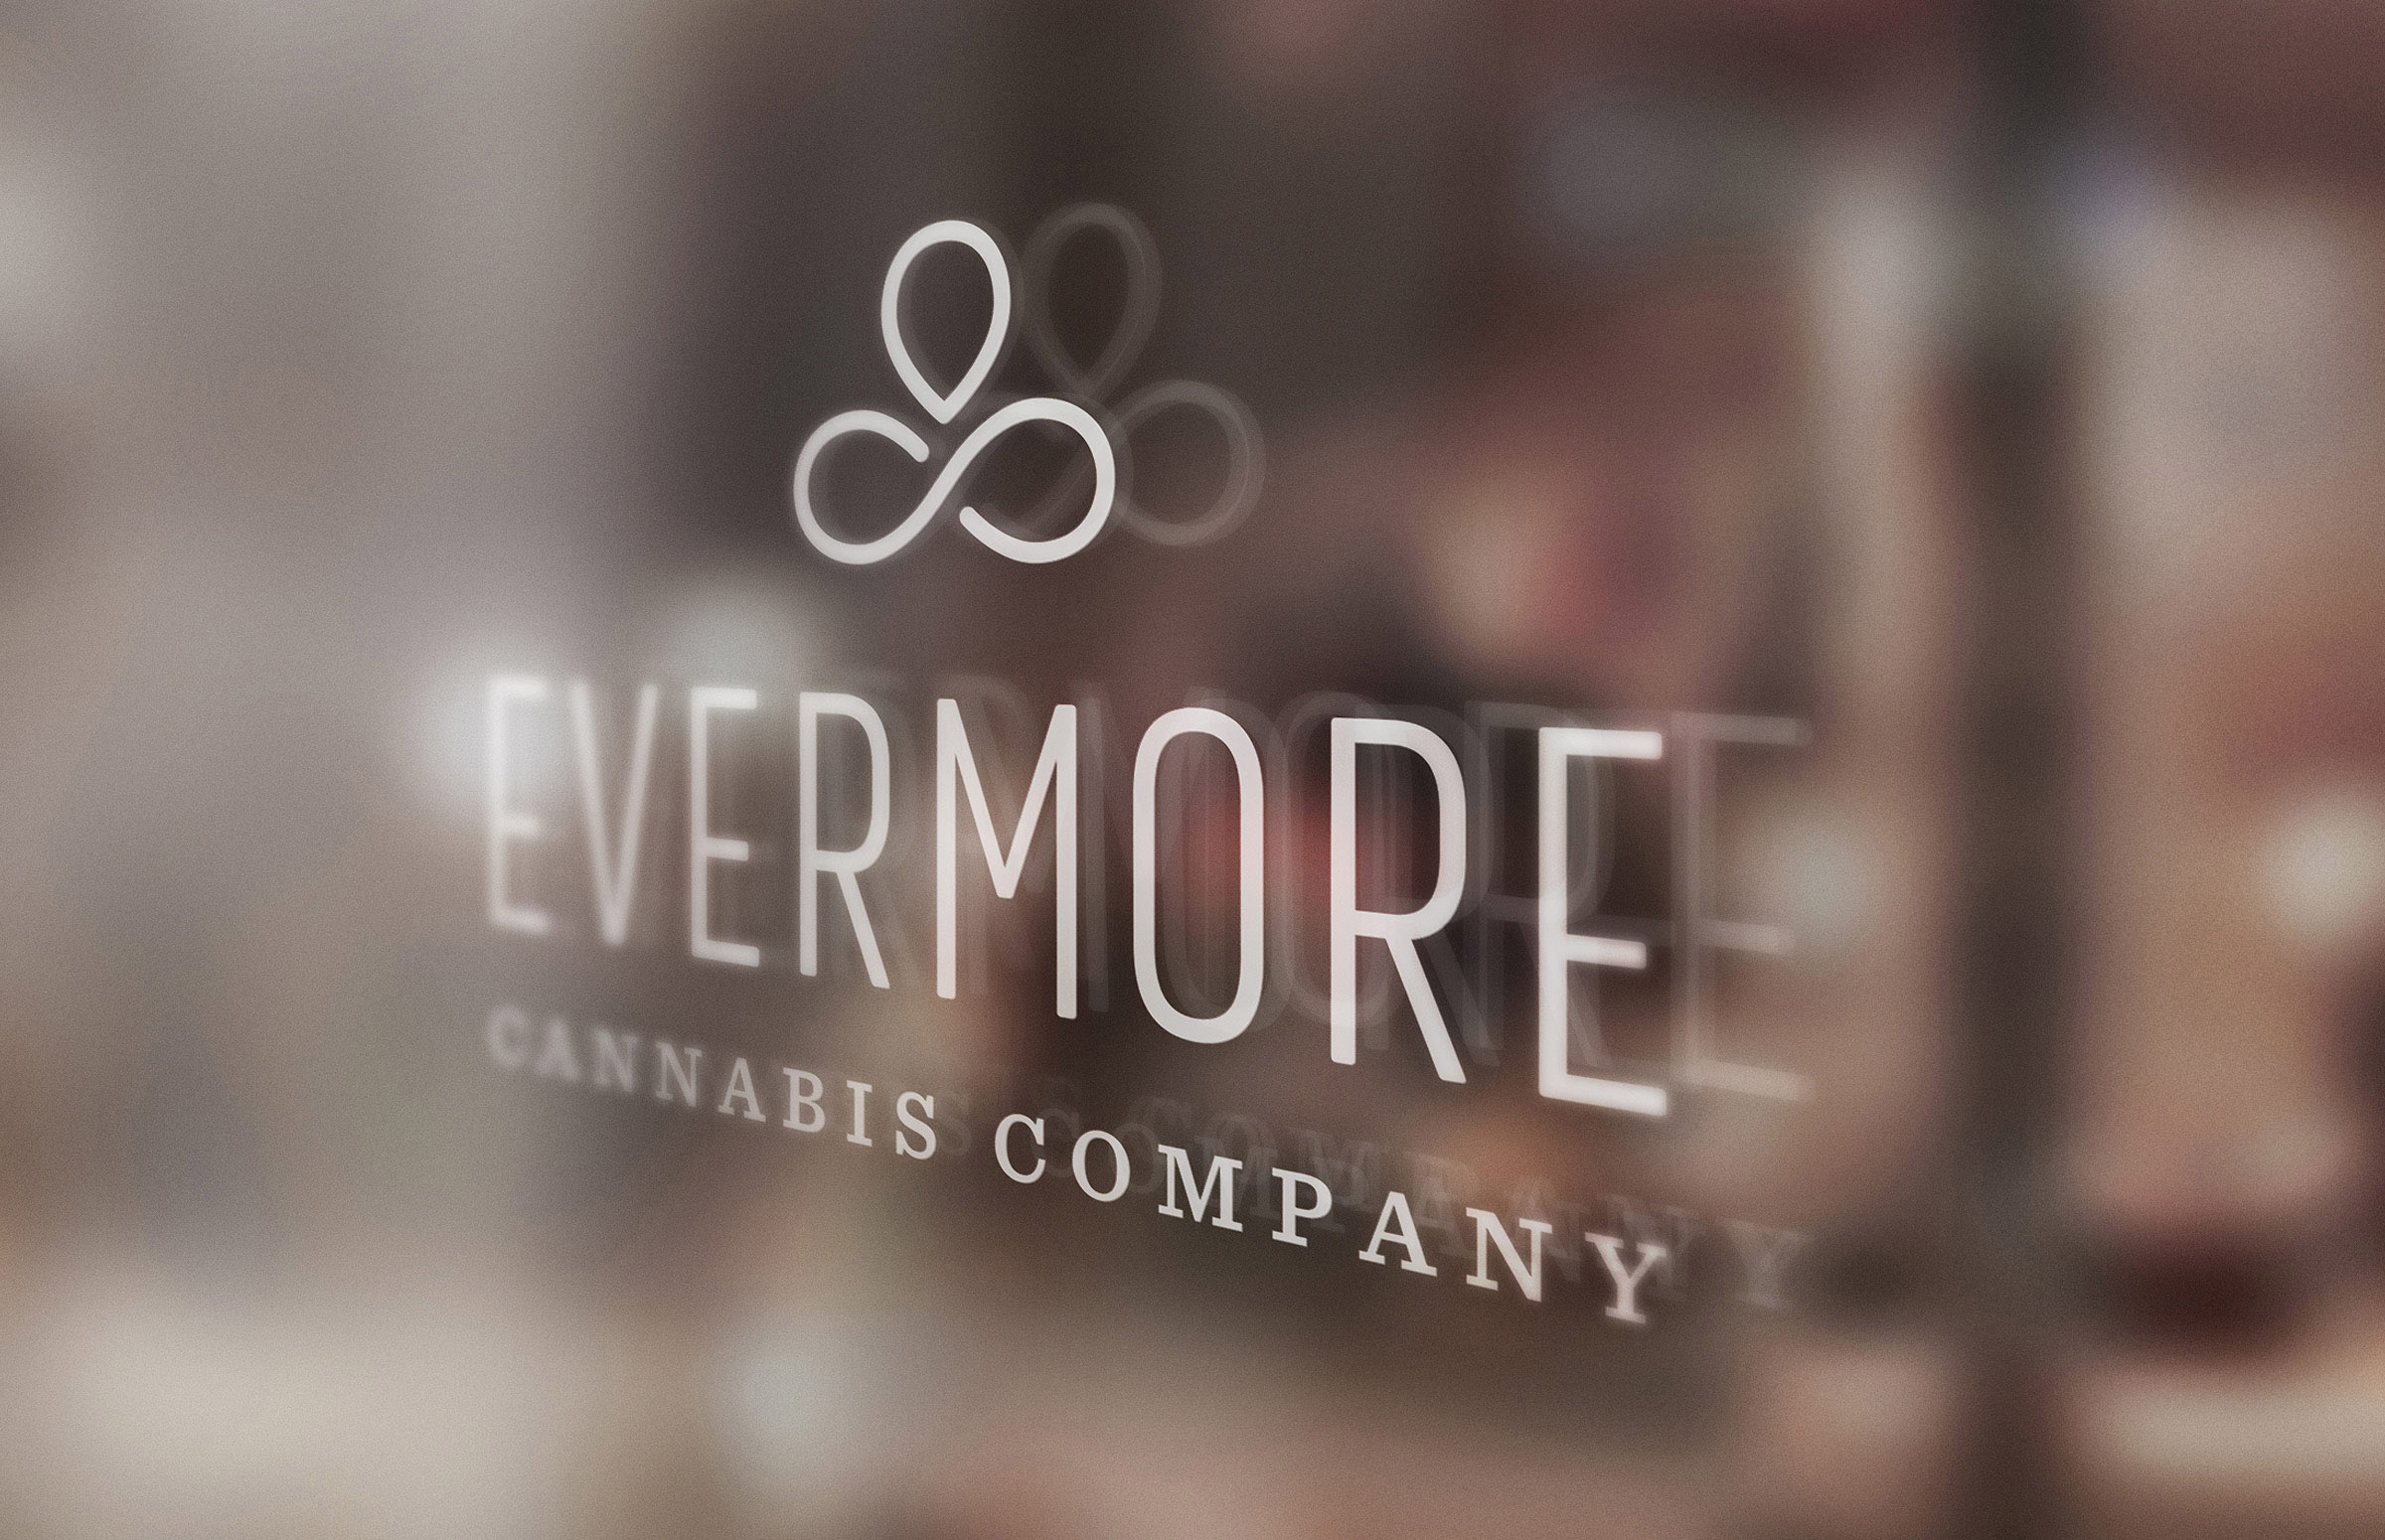 Evermore Cannabis Company: Door Signage